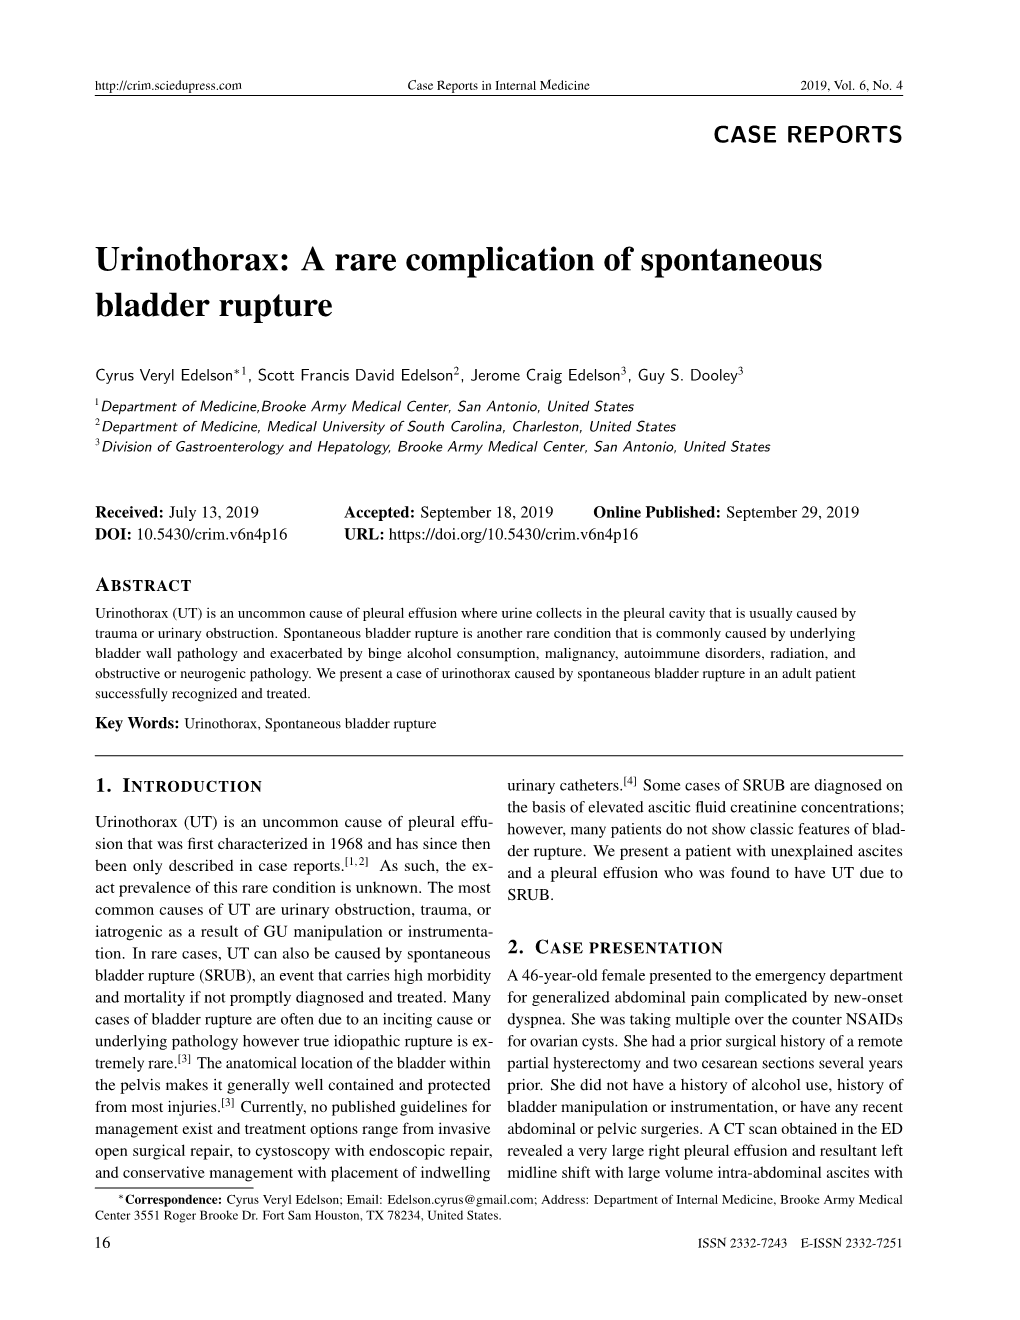 Urinothorax: a Rare Complication of Spontaneous Bladder Rupture